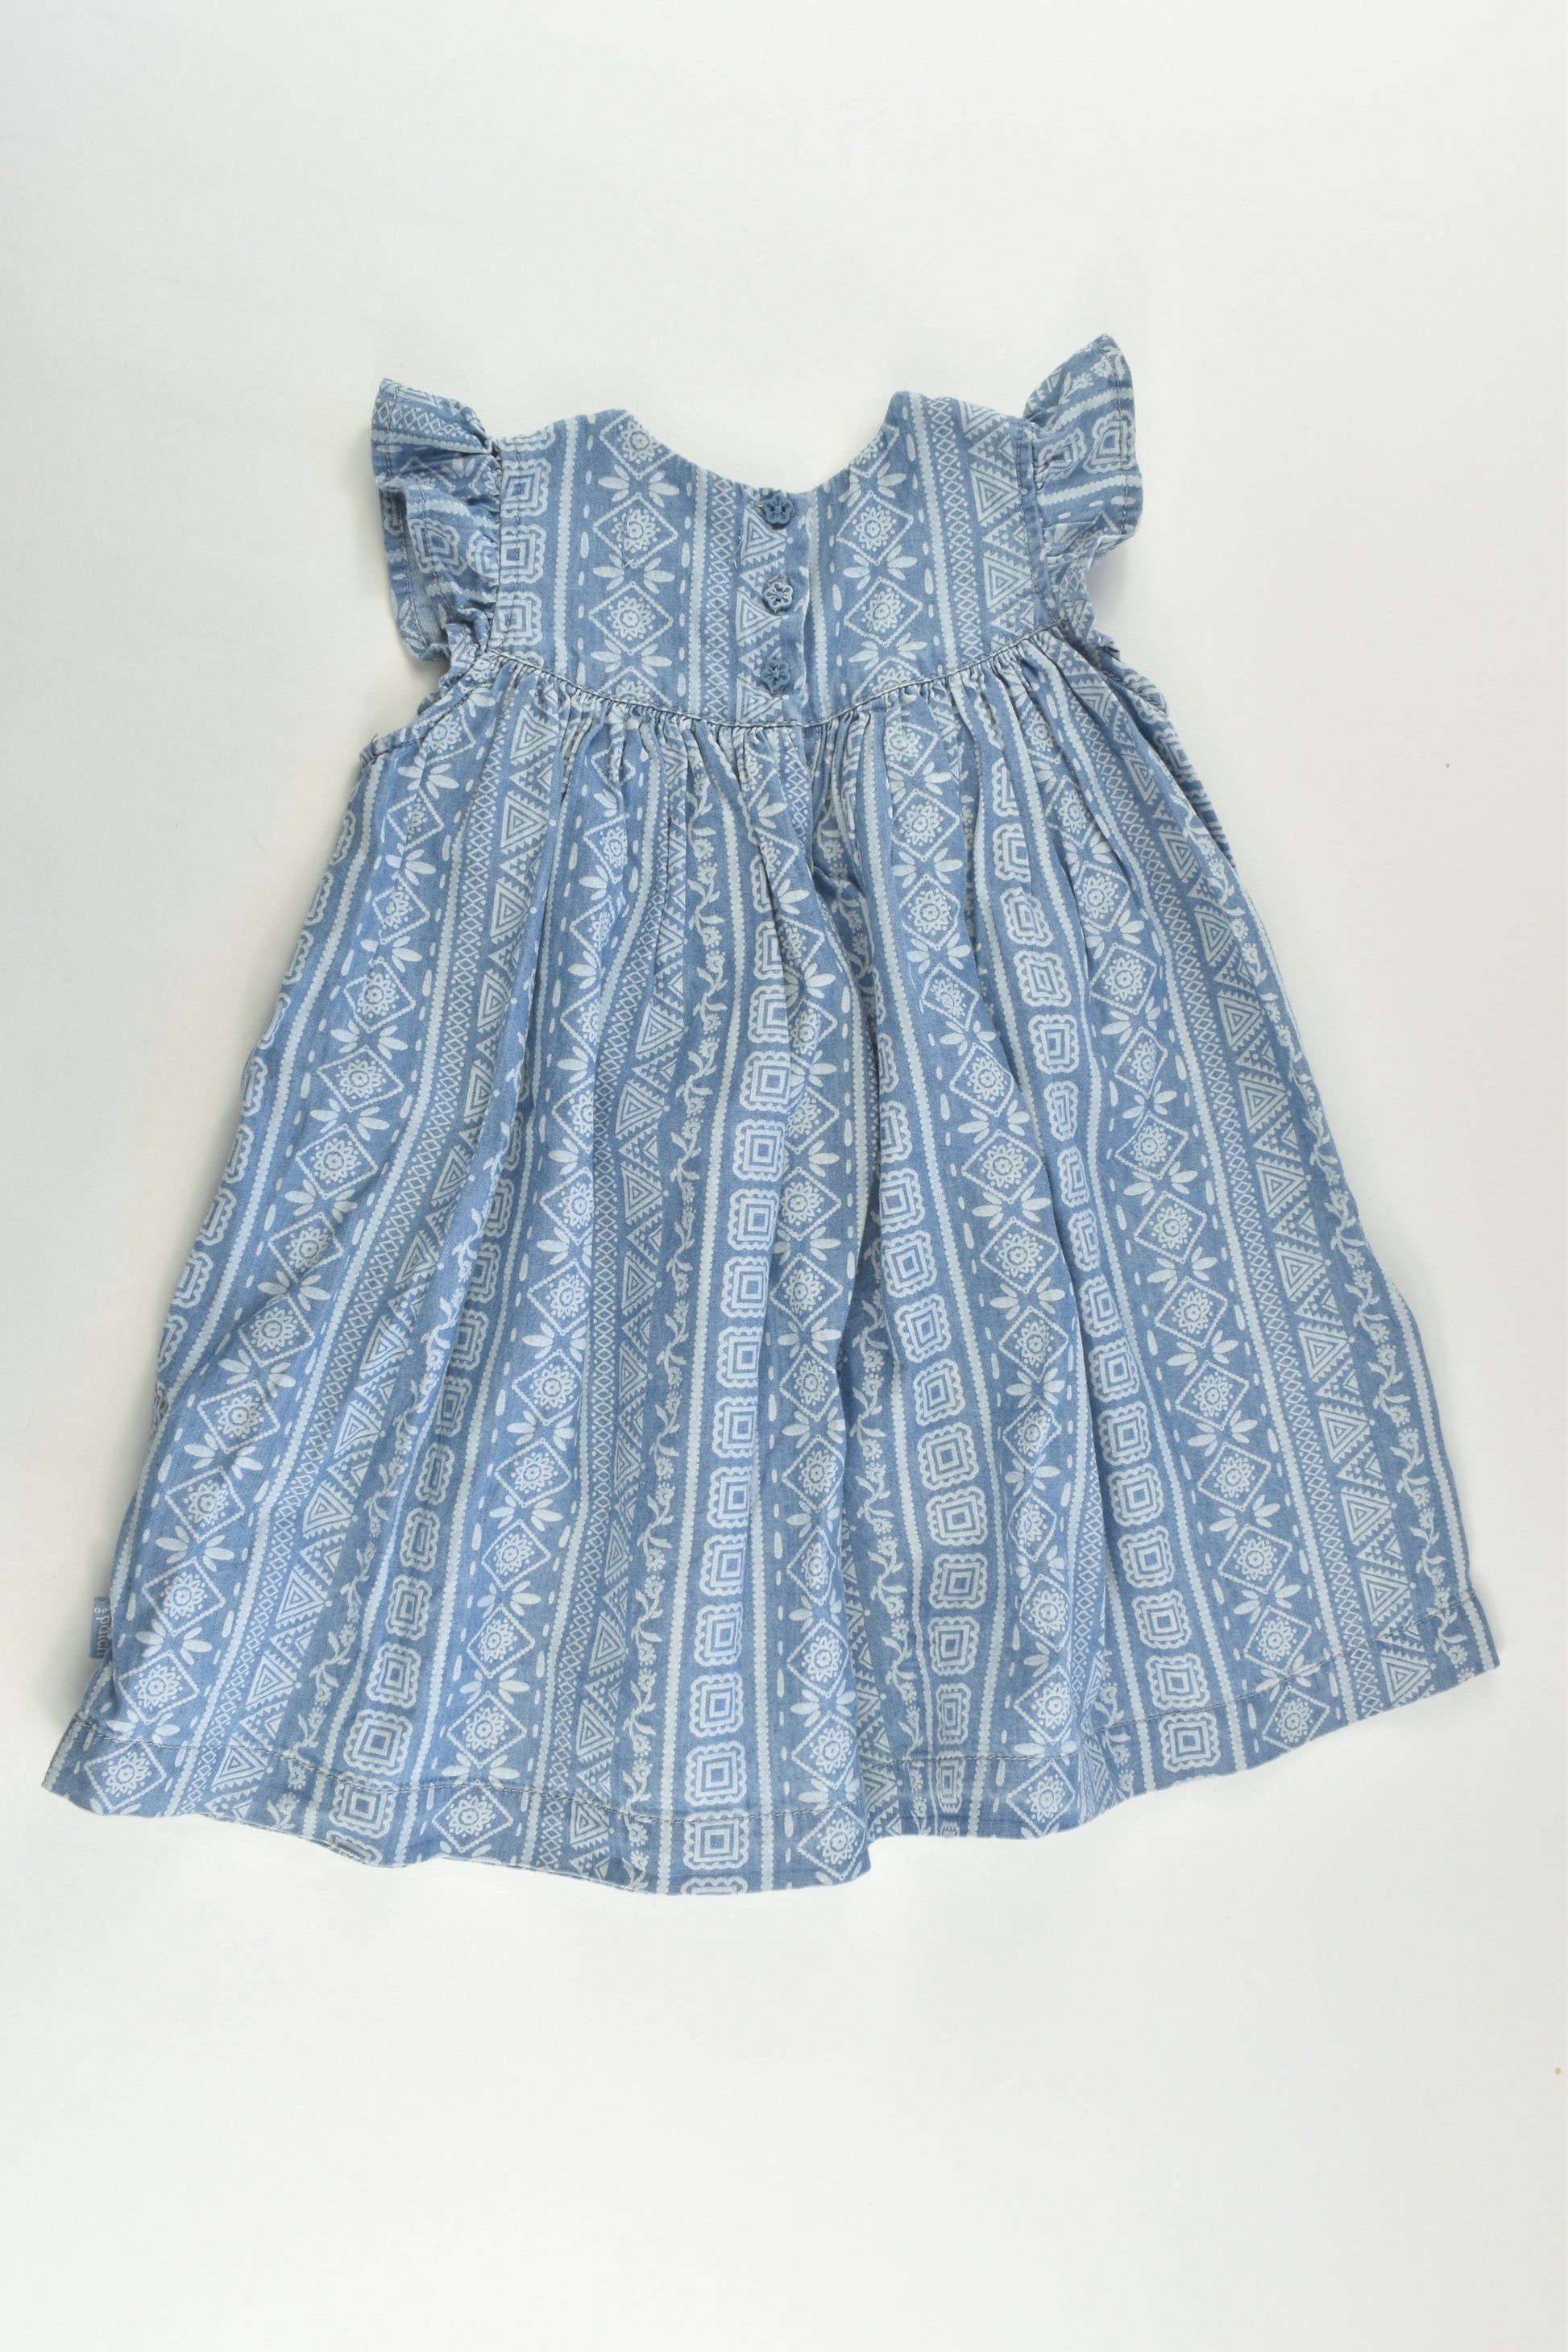 Pumpkin Patch Size 0 (6-12 months) Lightweight Denim Dress with Embroidery